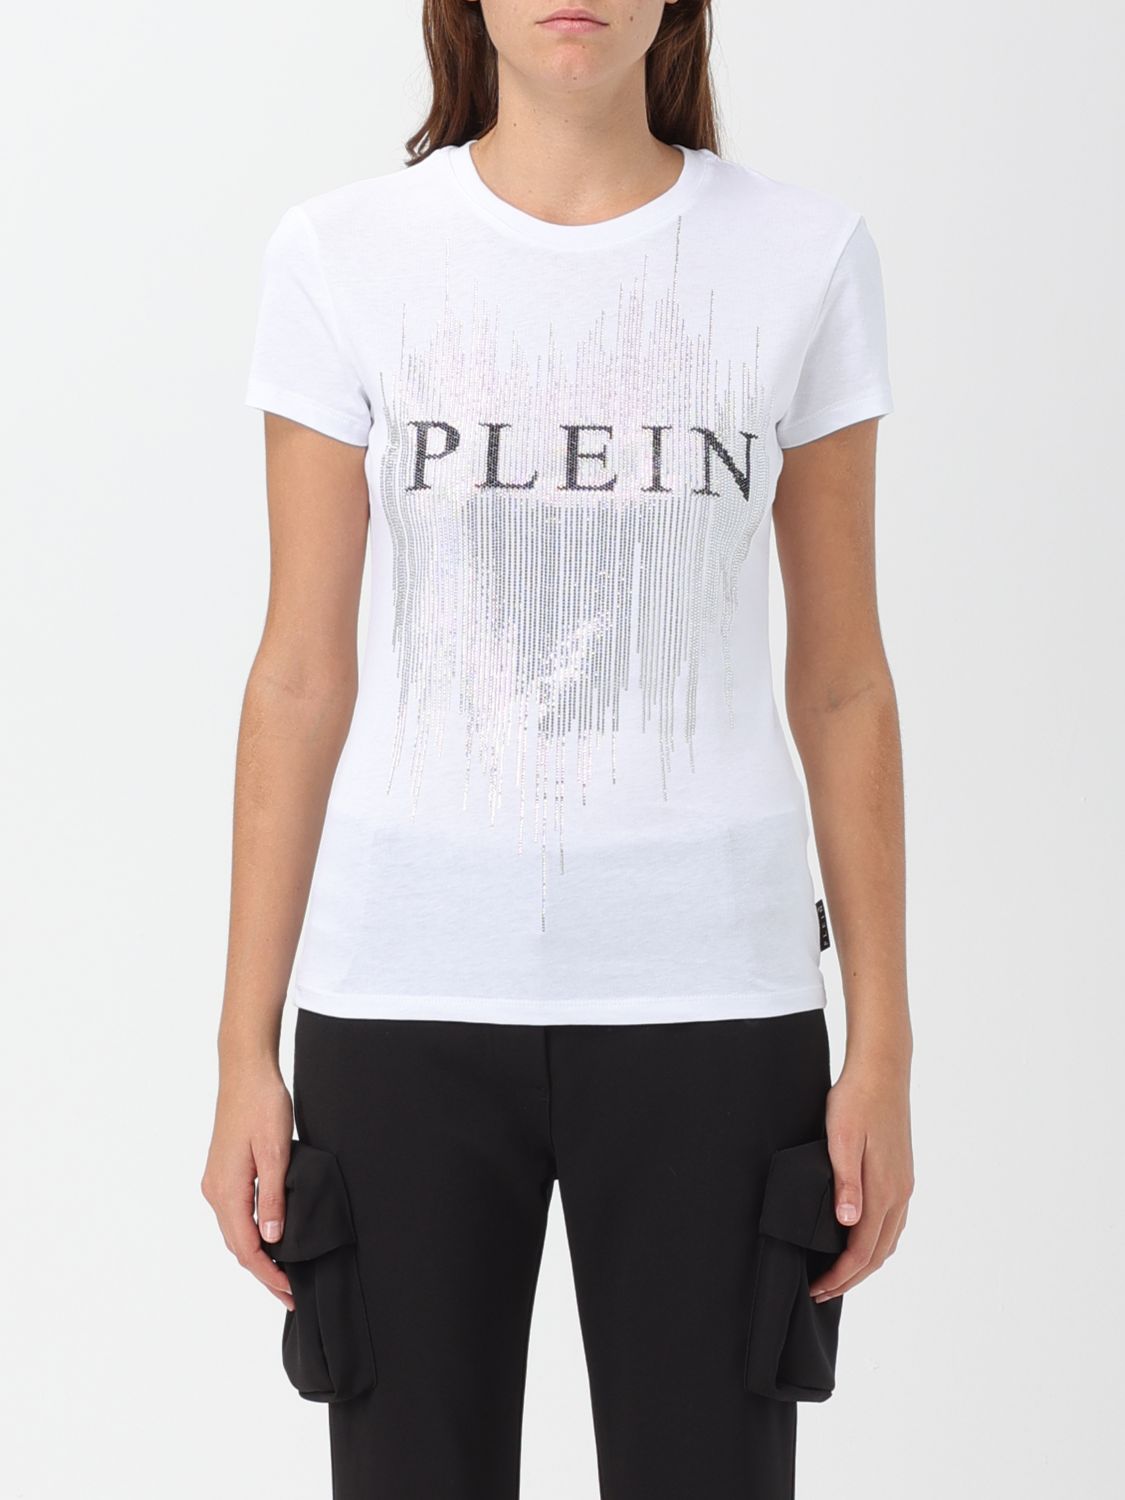 Philipp Plein T-Shirt PHILIPP PLEIN Woman colour White